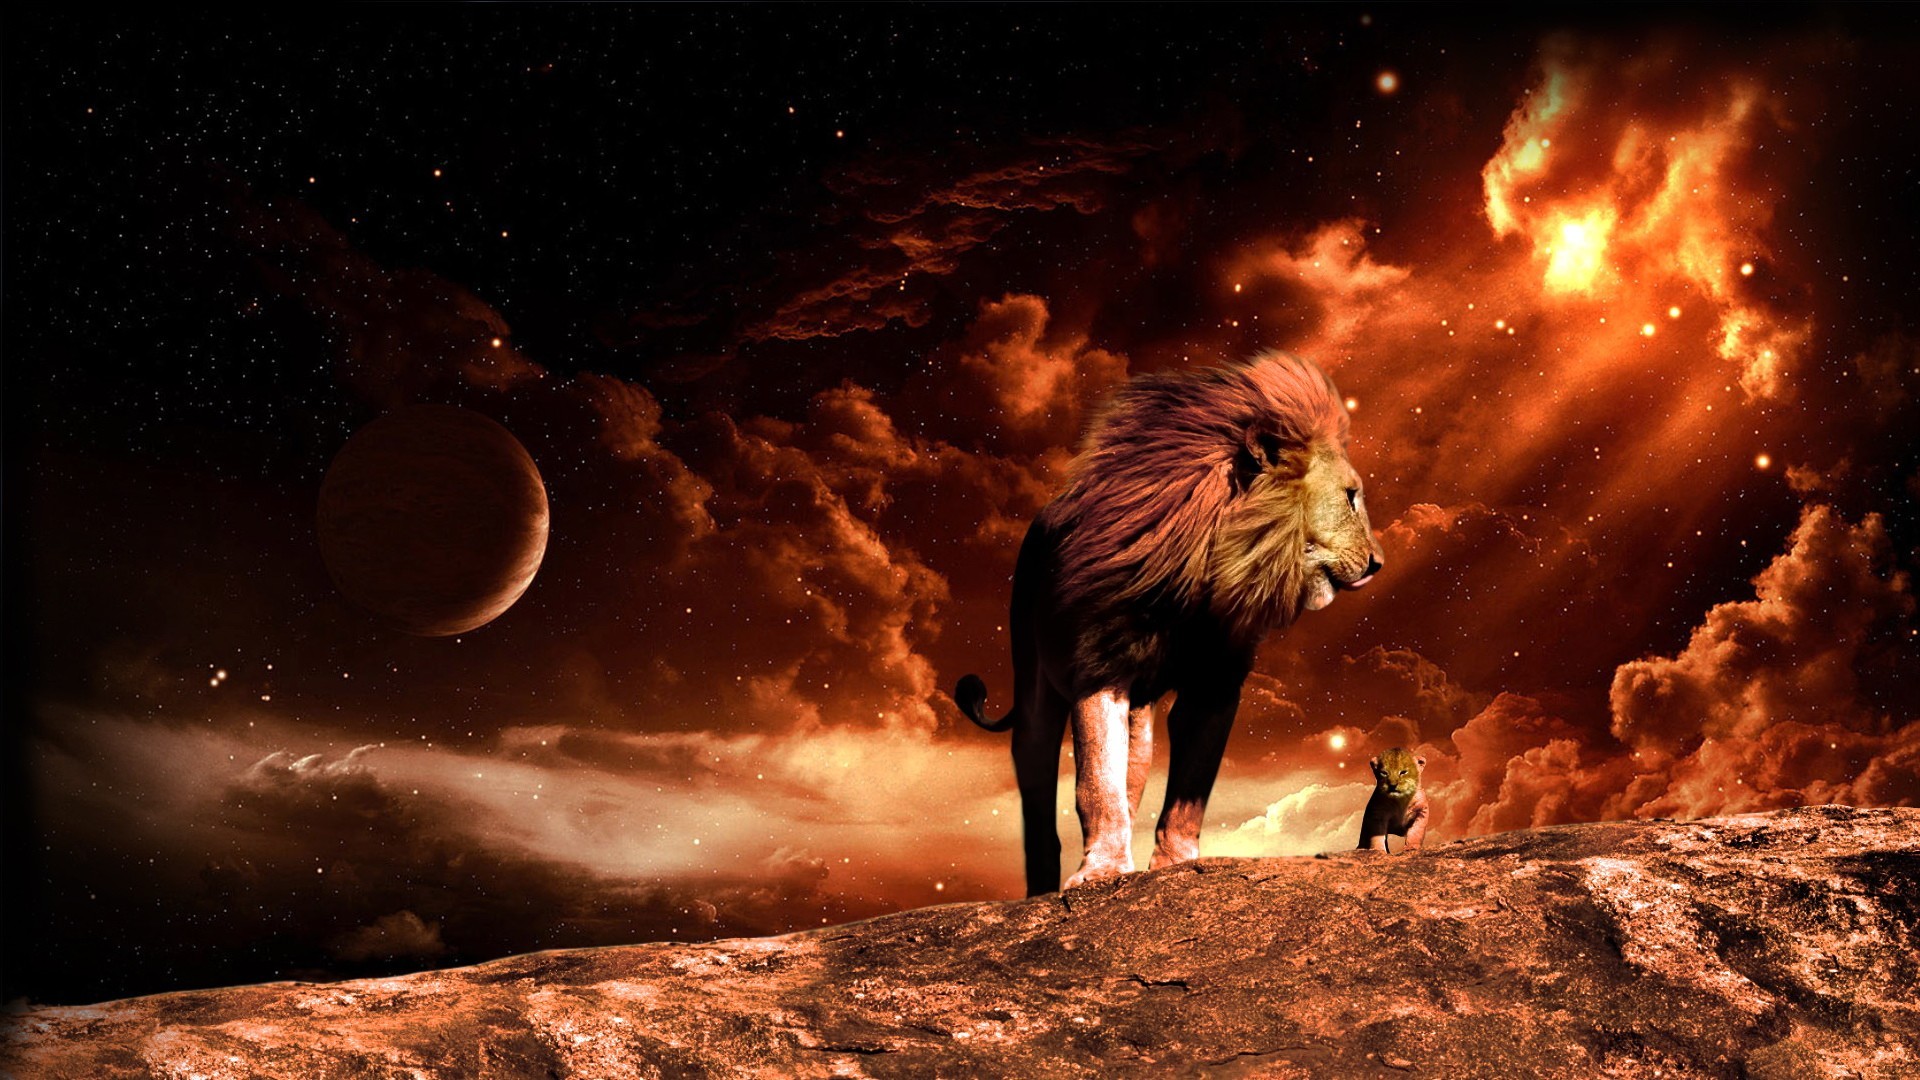 1920x1080 Artistic - Animal - Lion - Fire - Flame - Cgi - Digital Art - Manipulation  Wallpaper | Darkness - Autor Variado | Pinterest | Artistic wallpaper, ...